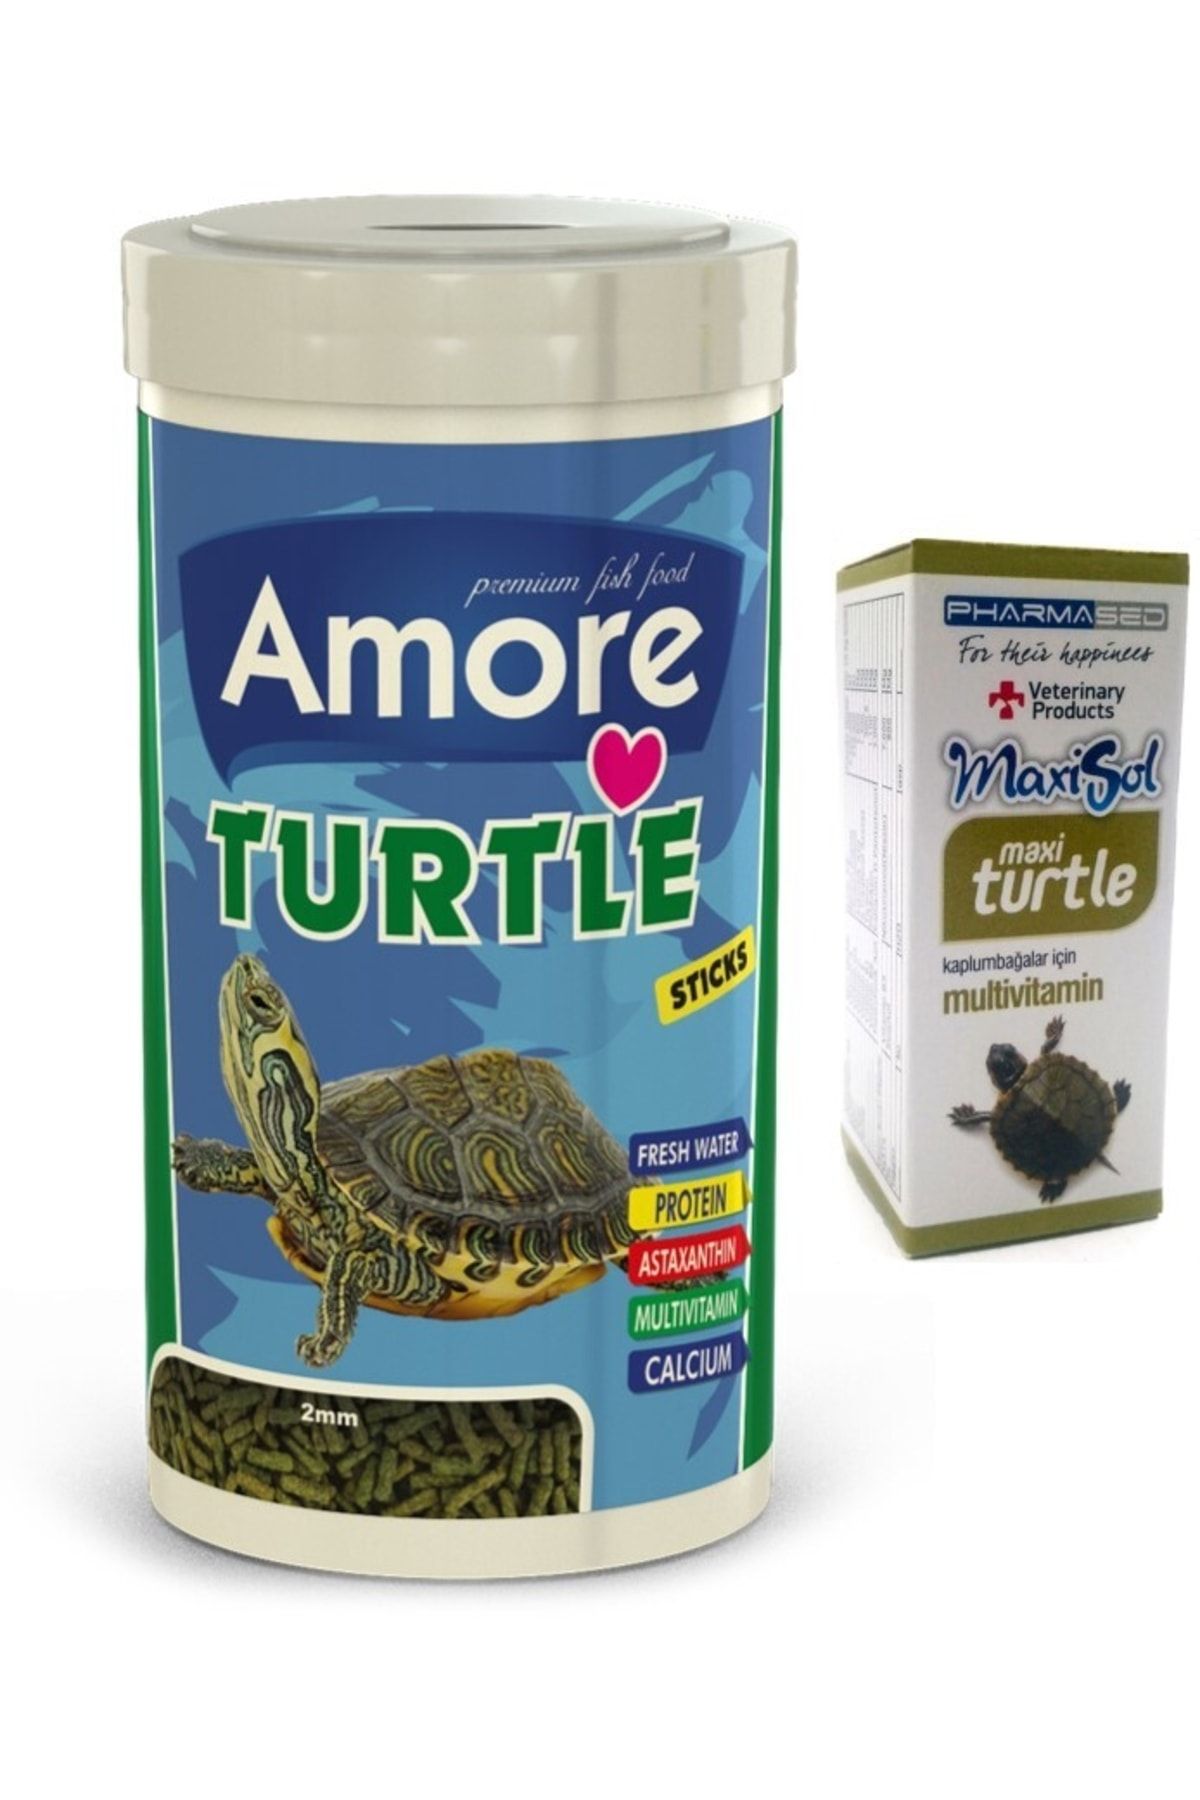 AMORE Turtle Sticks 1000ml Kutu Sürüngen, Kaplumbağa Yemi Ve Vitamini